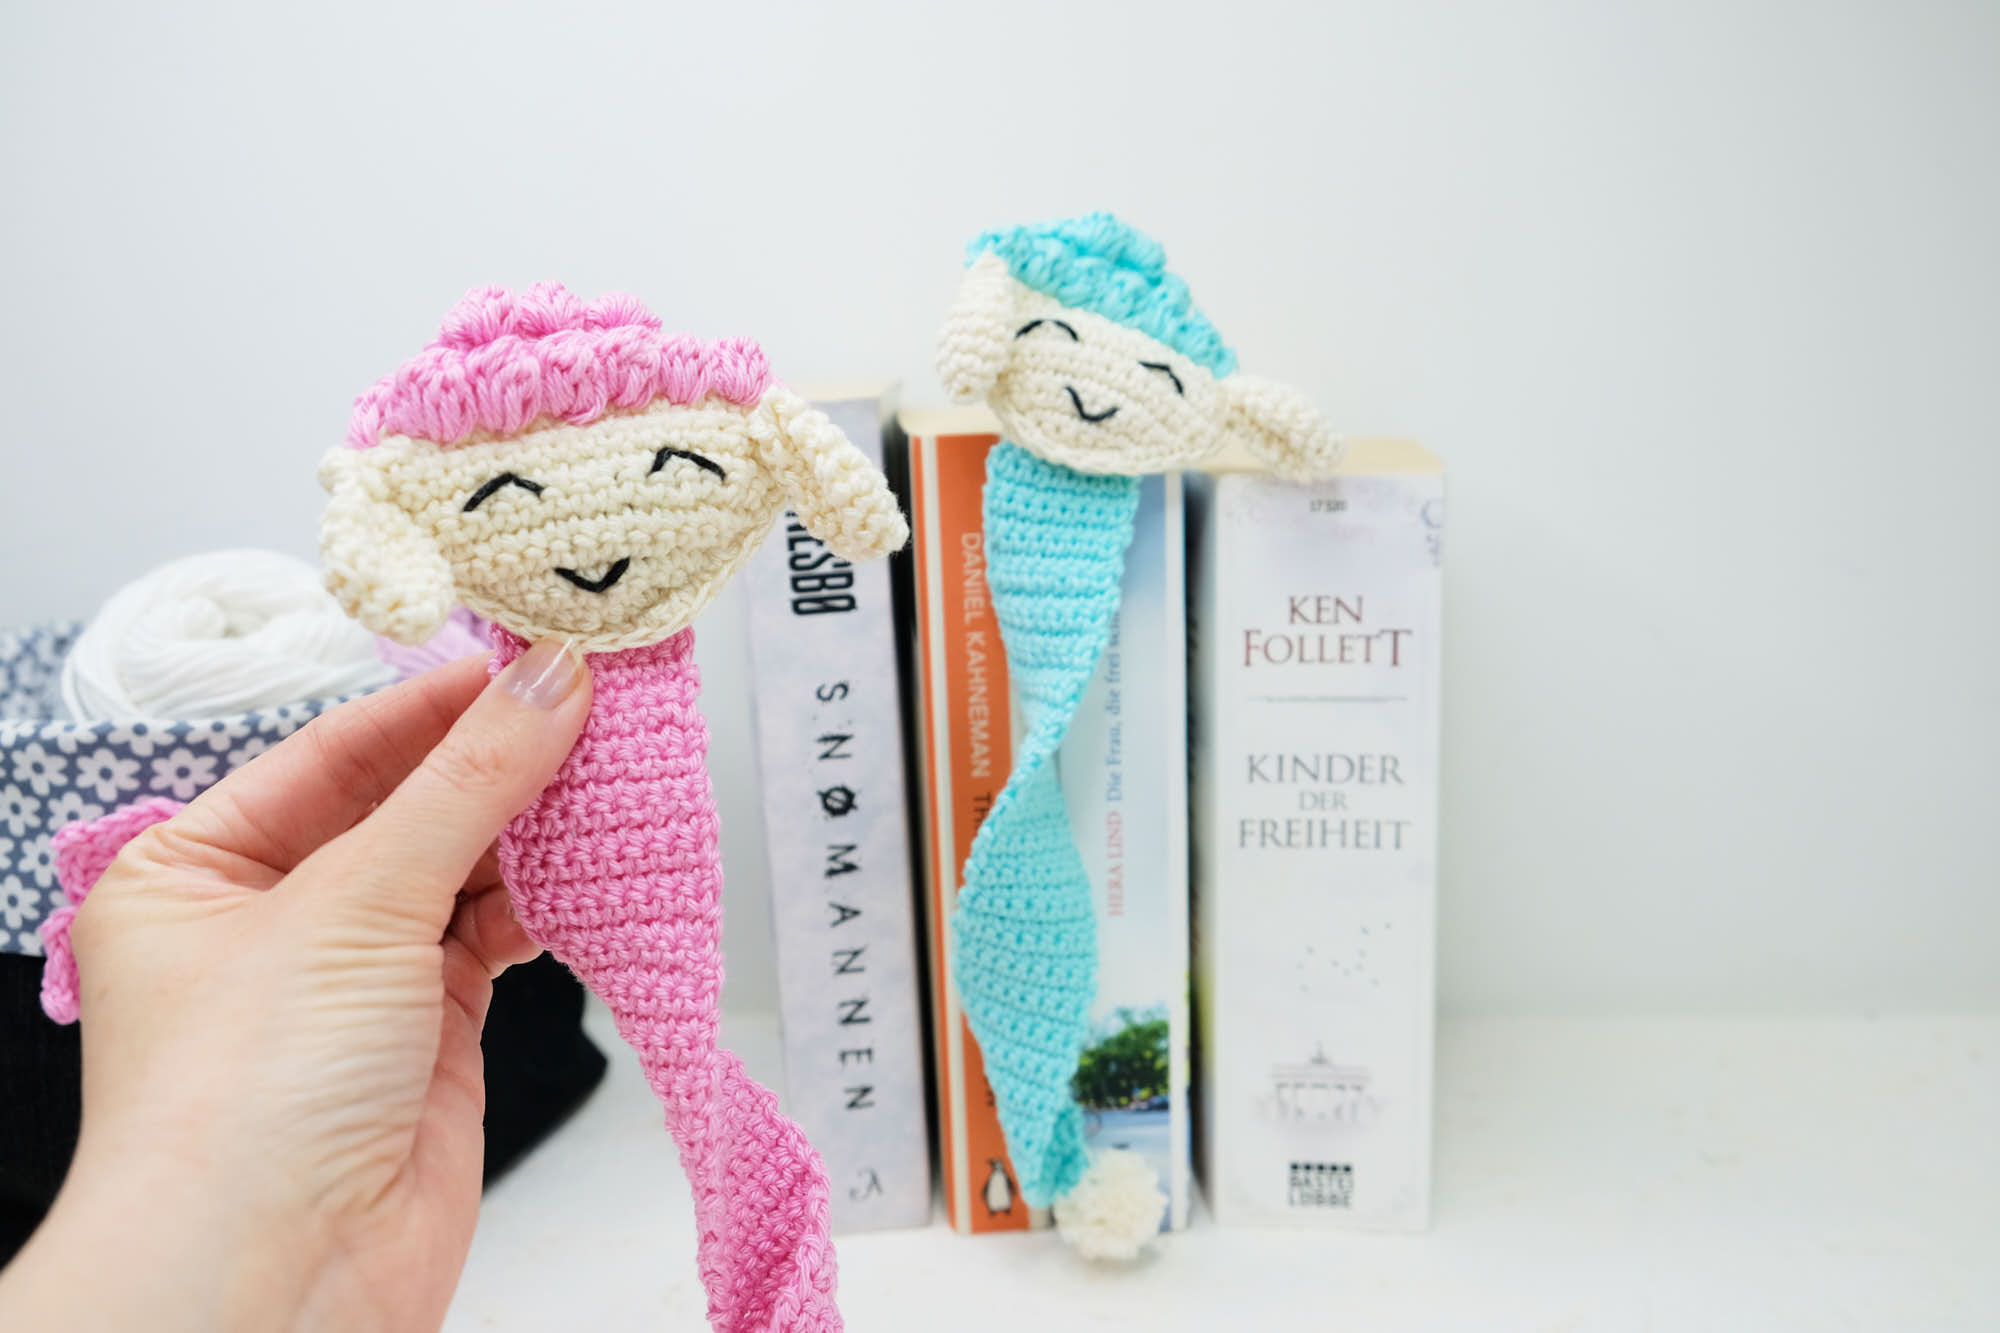 Bookworm Crochet Pattern, Crochet Bookworm Amigurumi, Book Crochet